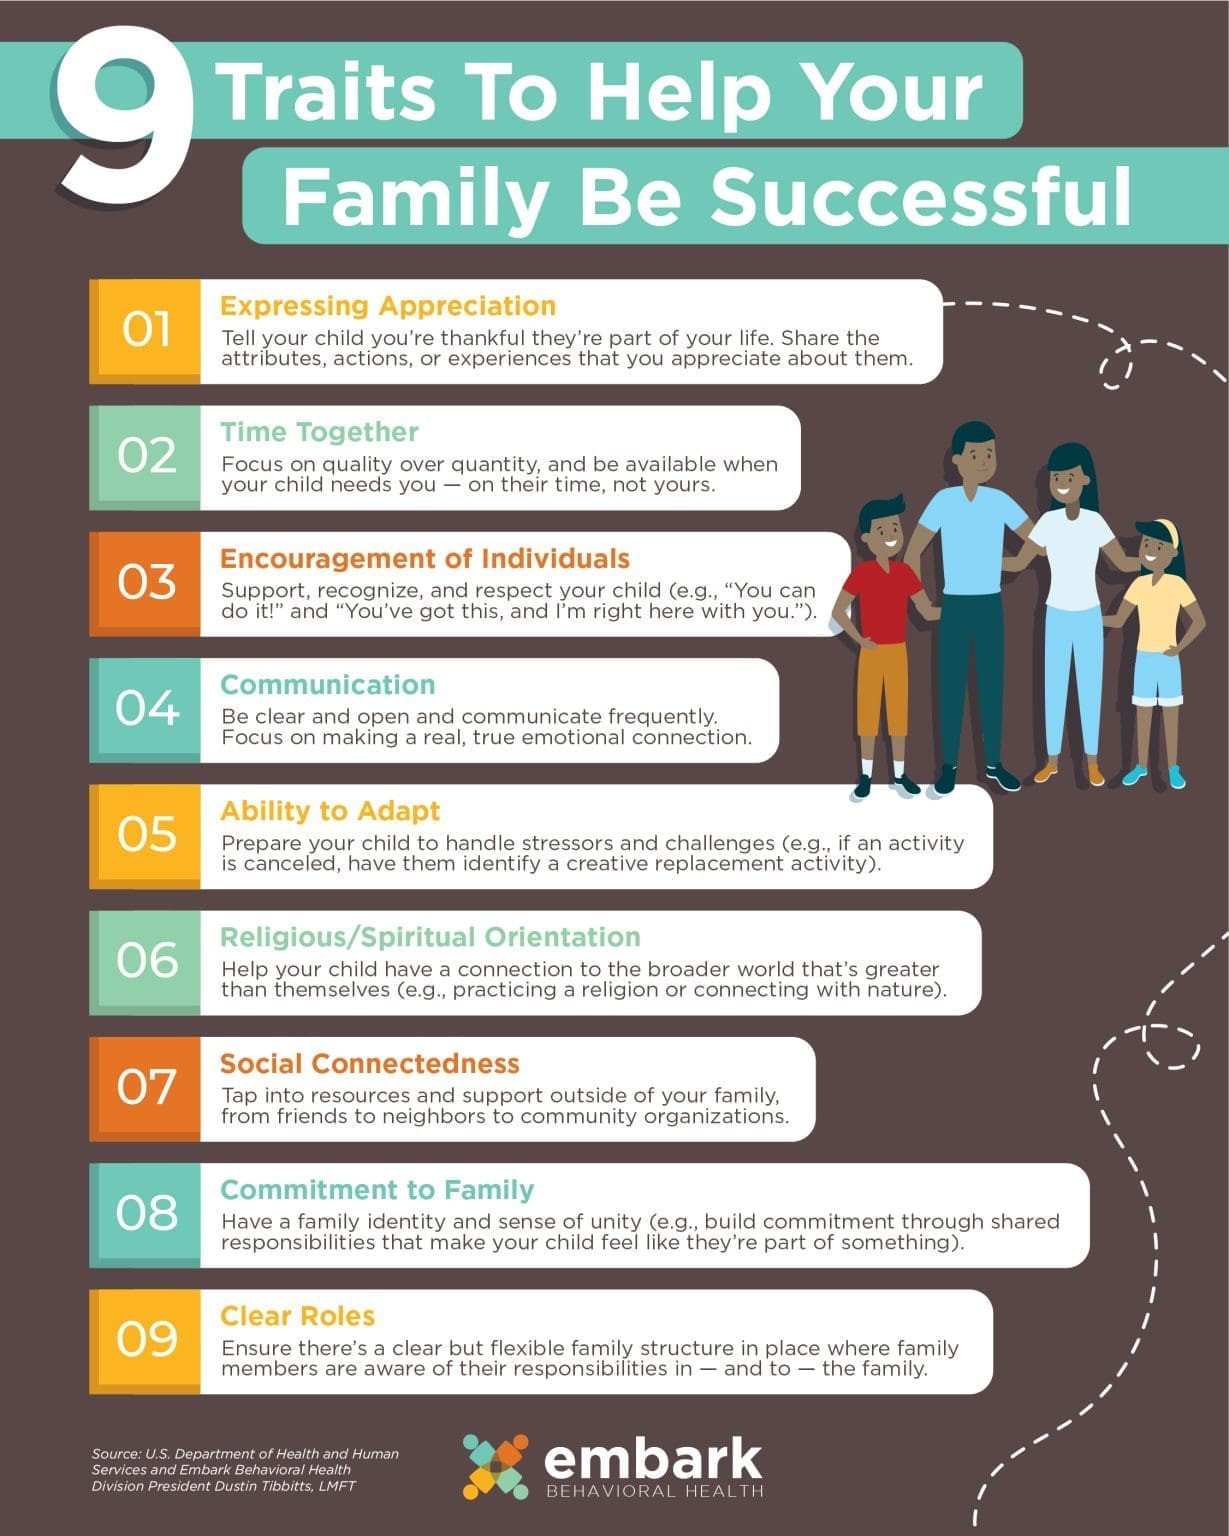 What Traits Make Families Successful? - Embark Behavioral Health